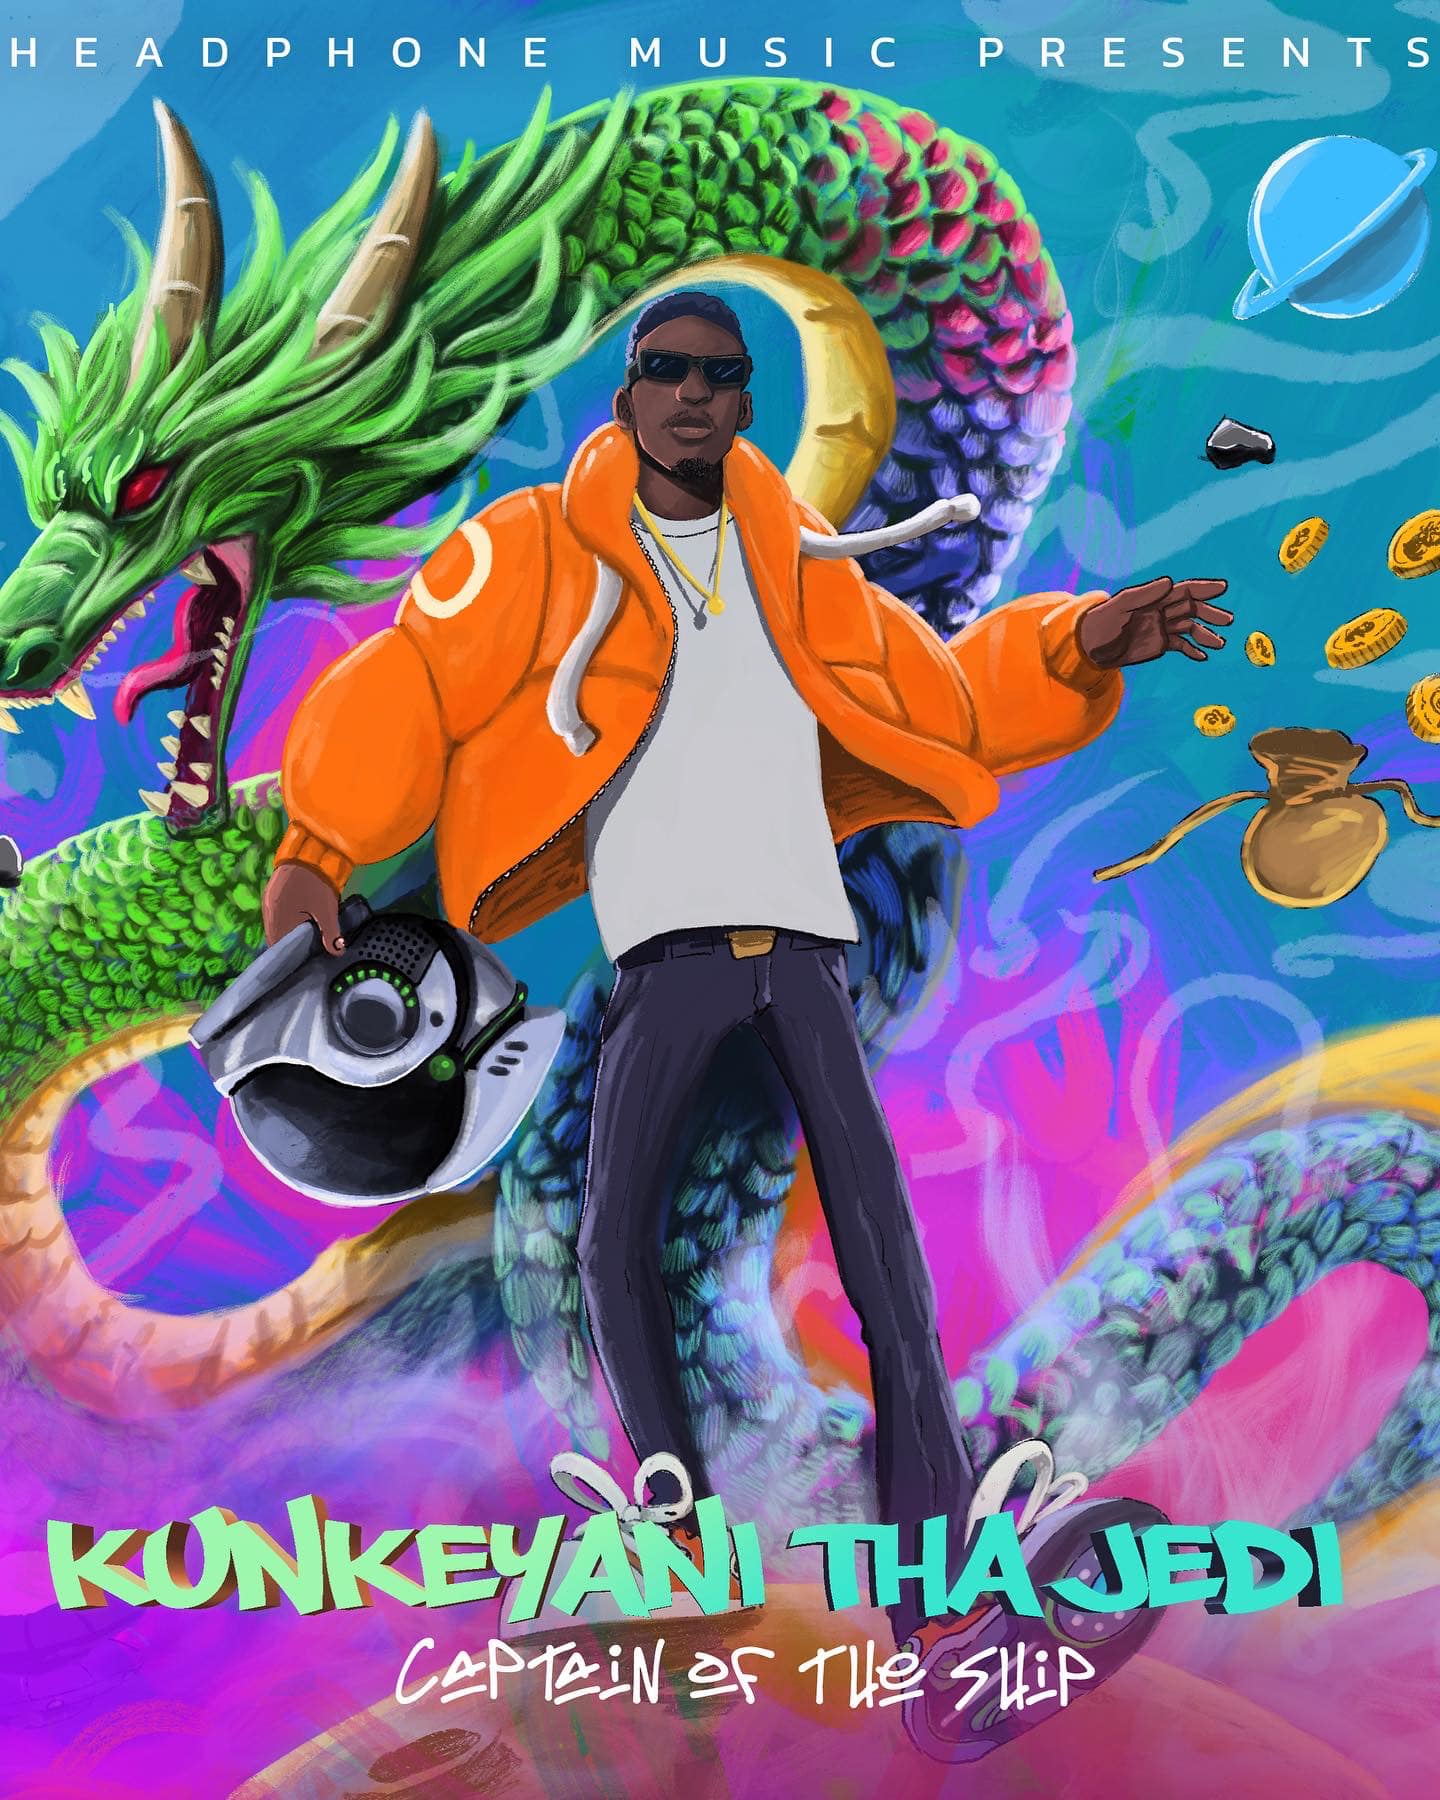 Kunkeyani Tha Jedi - Captain Of The Ship